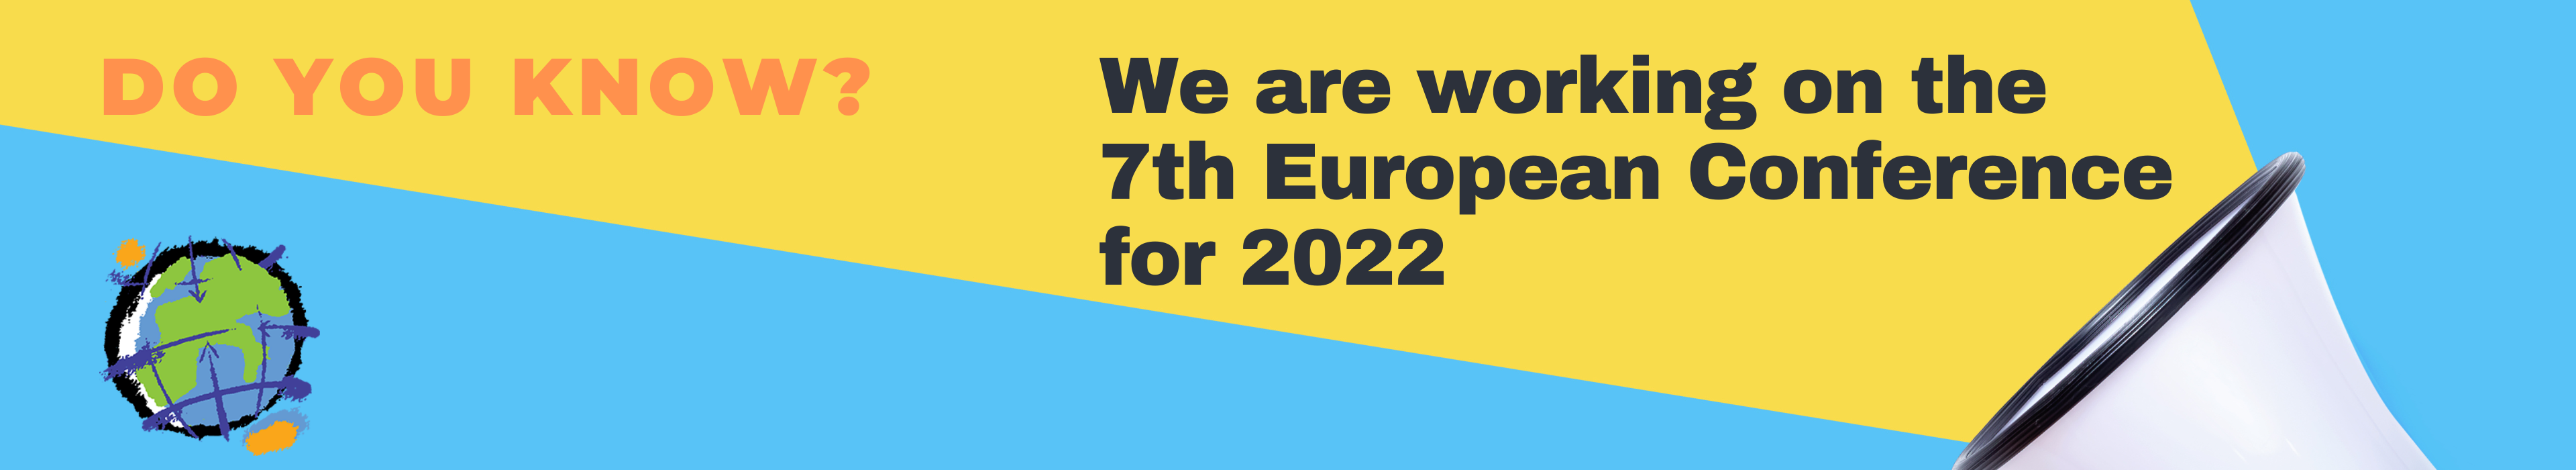 Teaser announcing the next EUROSHNET Conference in 2022